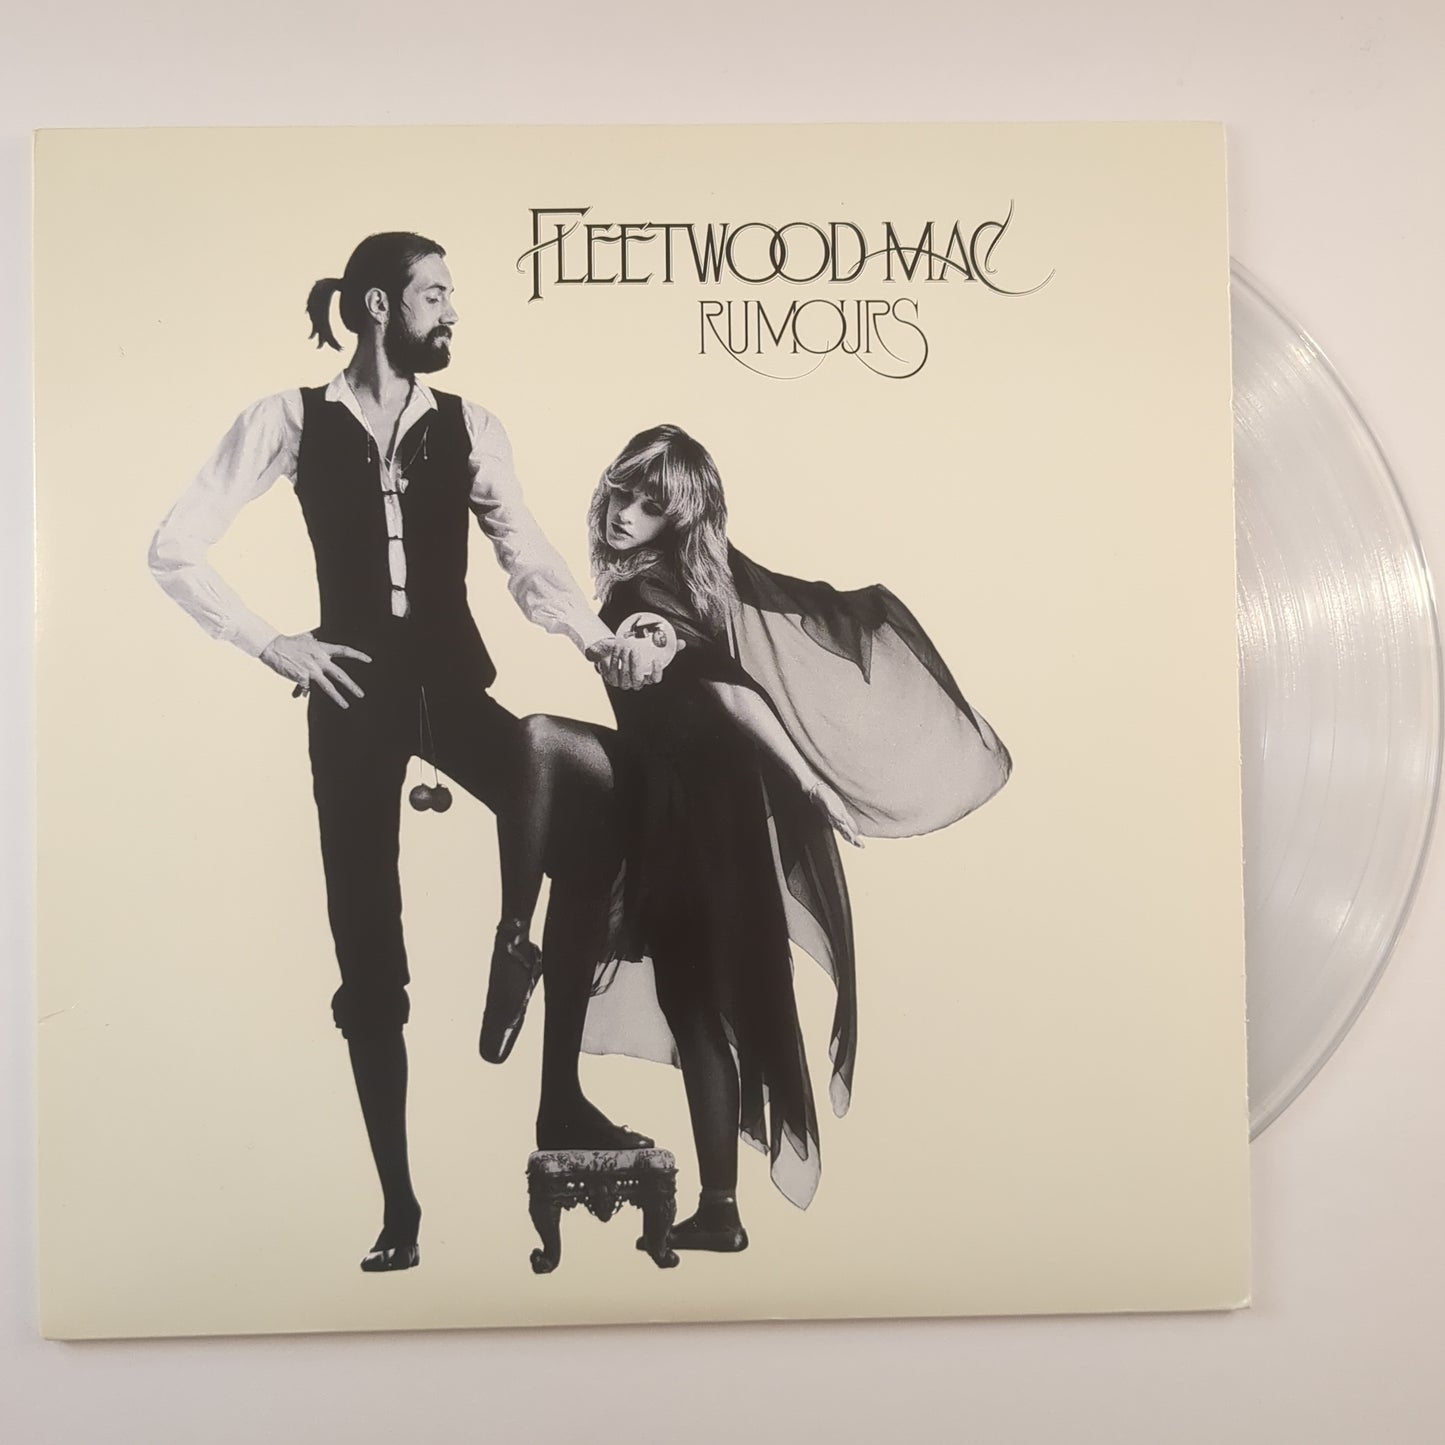 Fleetwood Mac - 'Rumours'